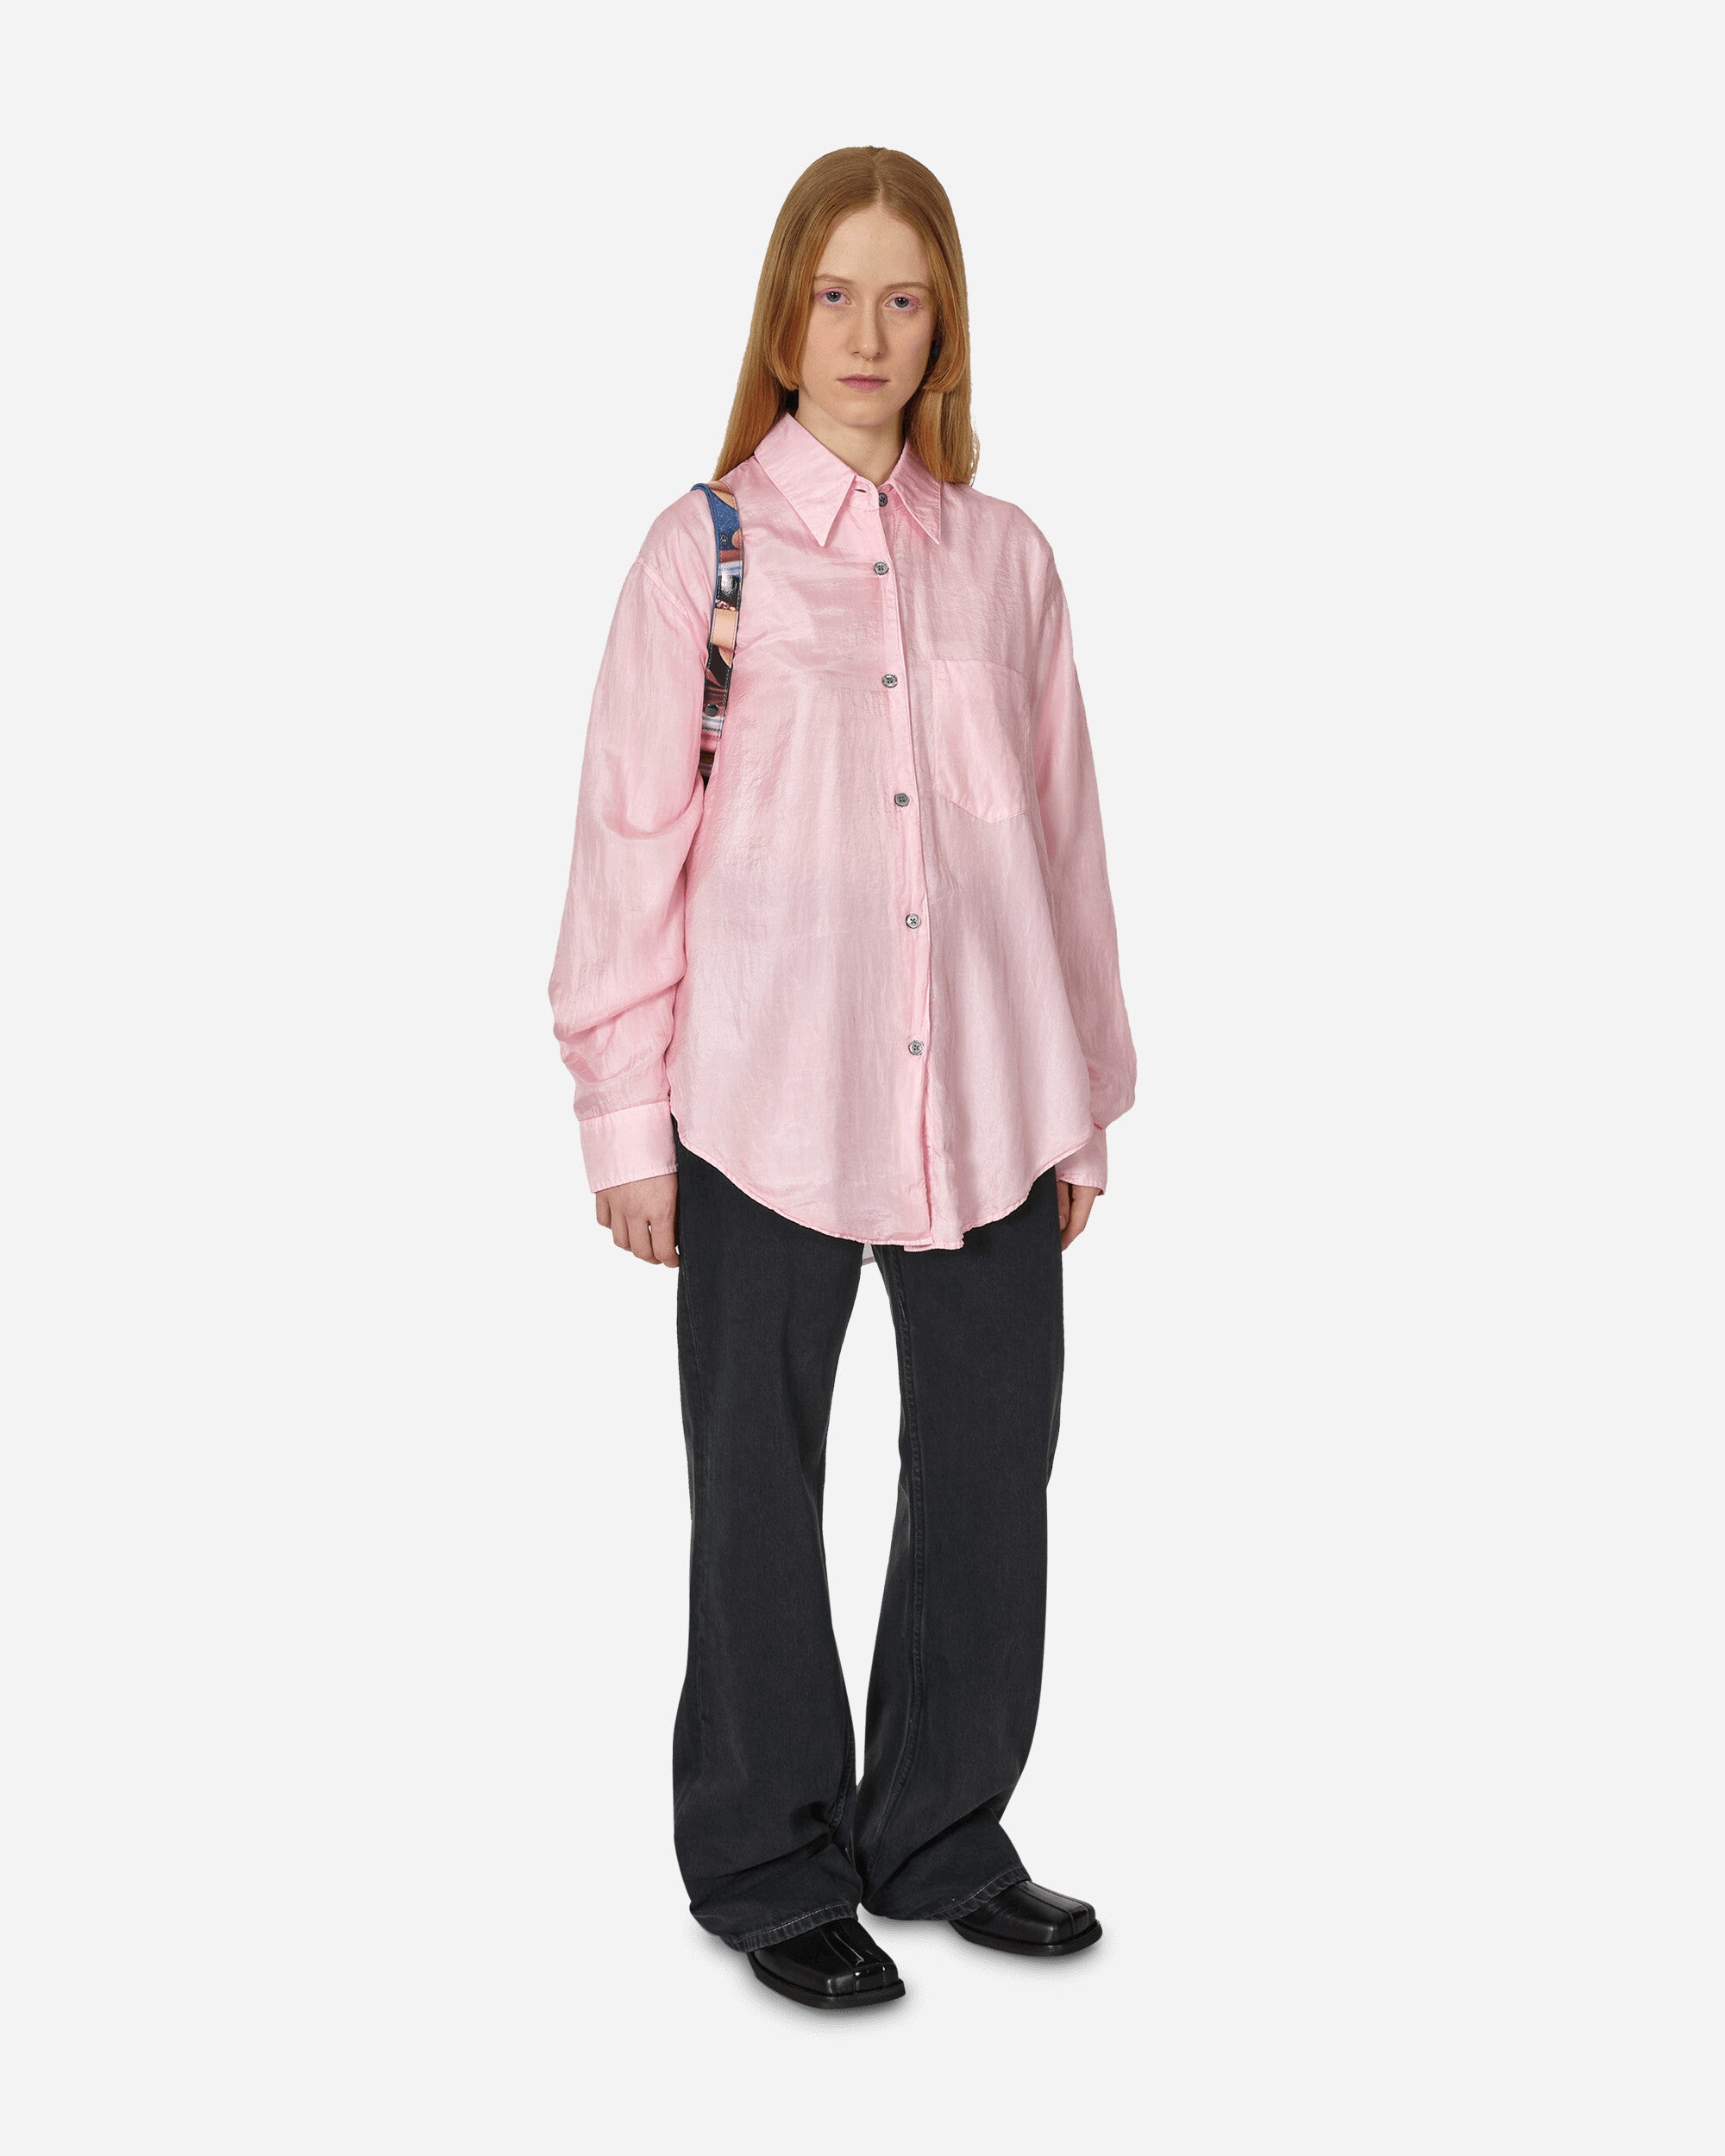 Apron Shirt Pink